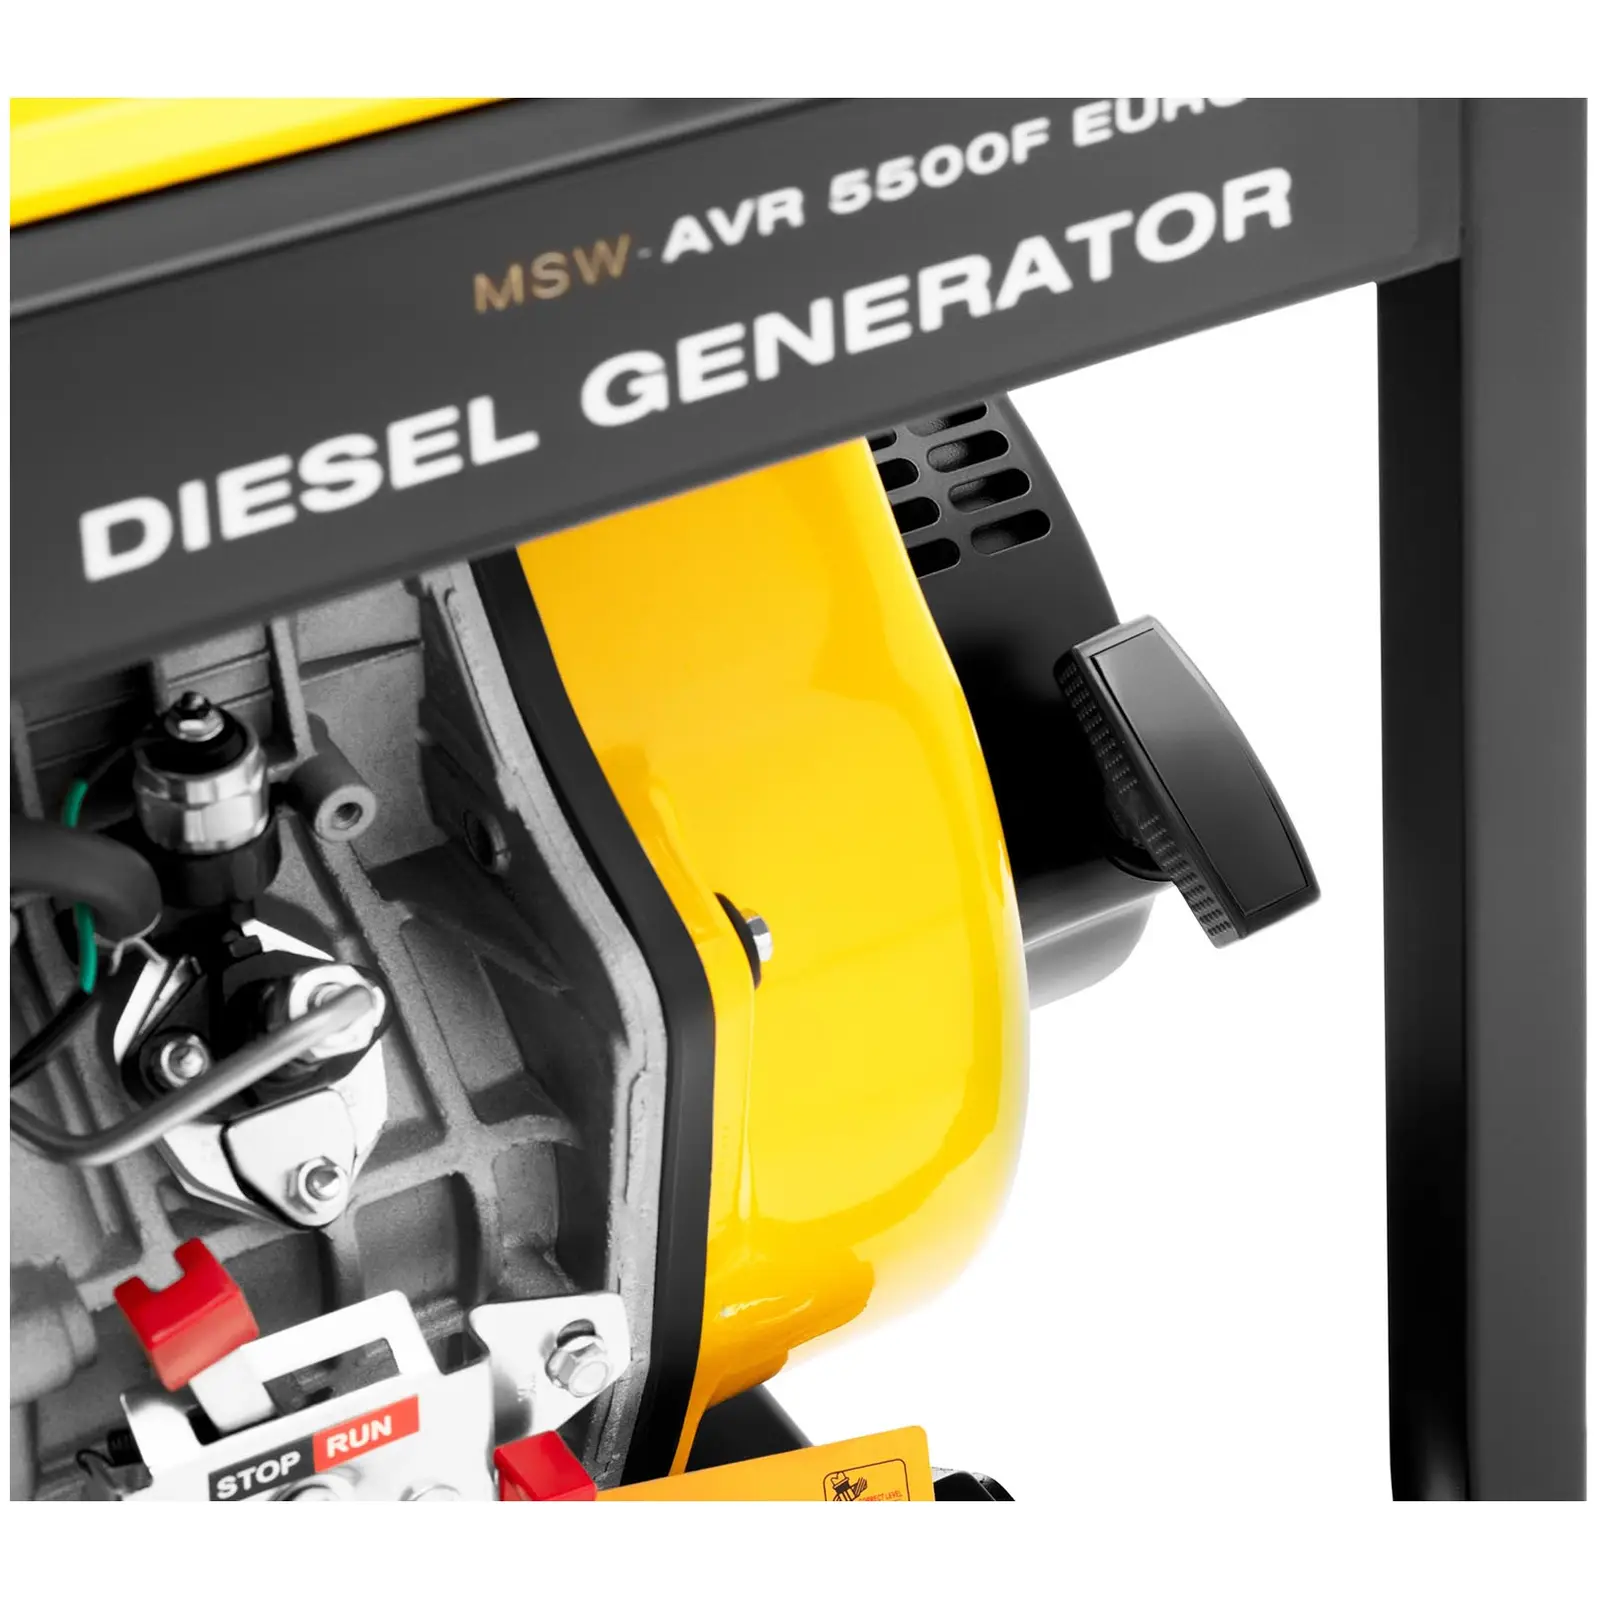 Agregat prądotwórczy Diesel - 1830 / 5500 W - 12,5 l - 240/400 V - mobilny - AVR - Euro 5